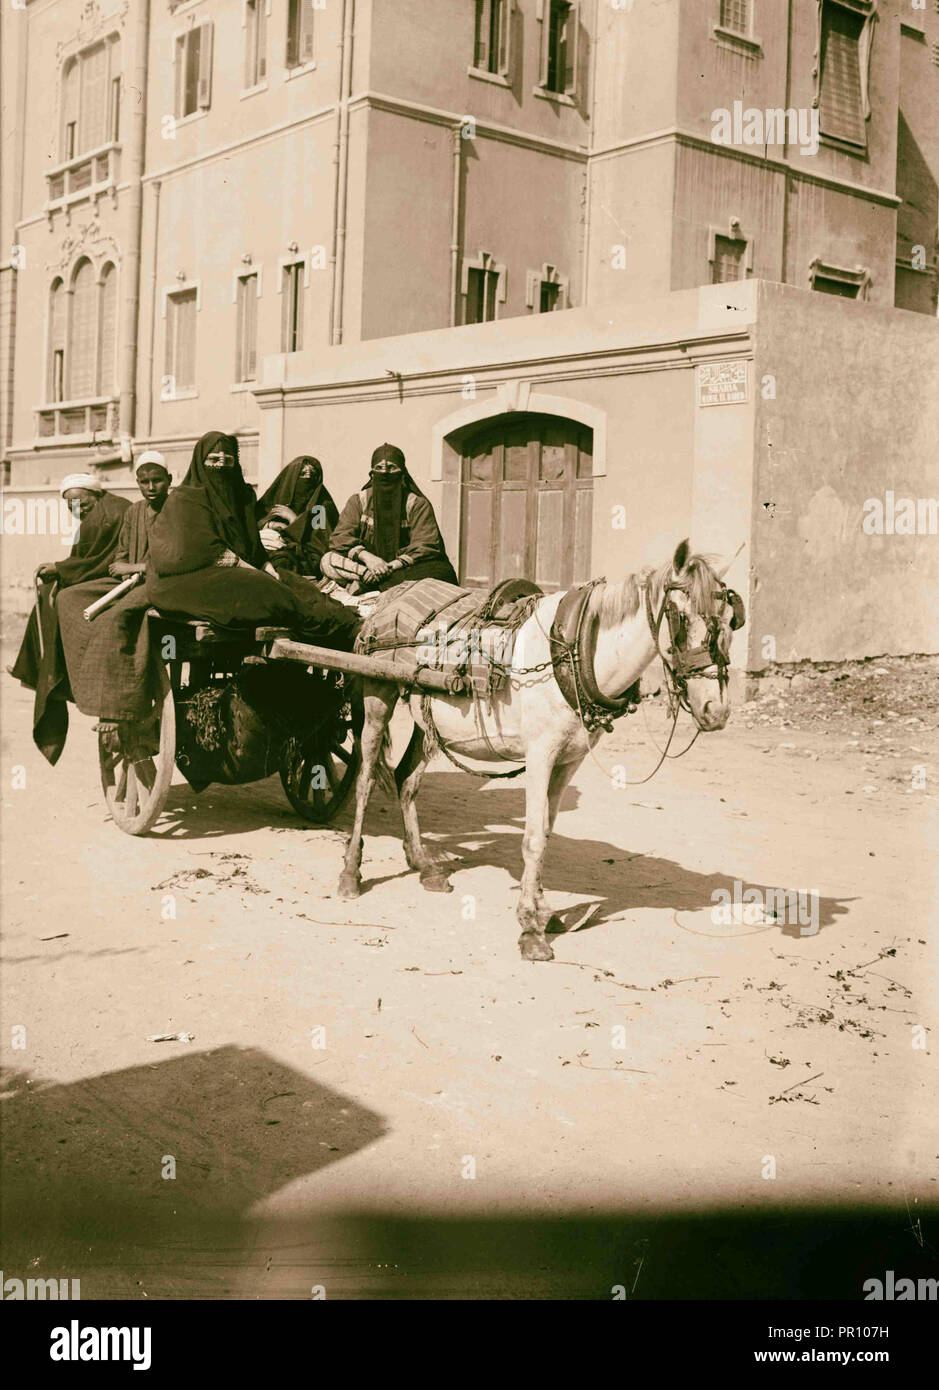 Egyptian characters, etc. Donkey cart with native passengers. 1900, Egypt Stock Photo